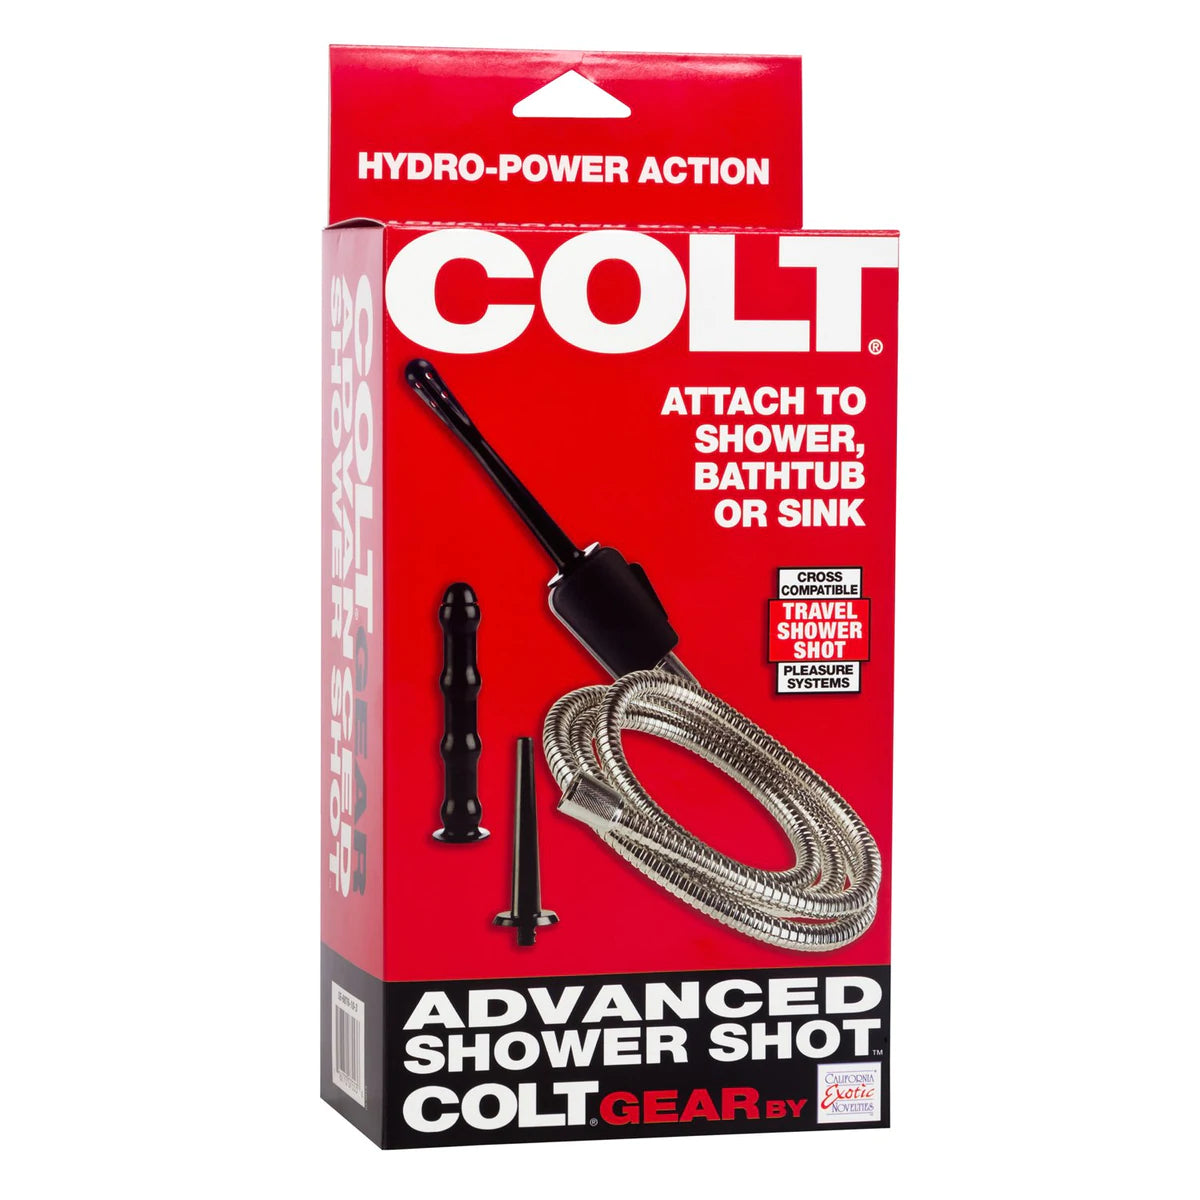 COLT Advanced Shower Shot